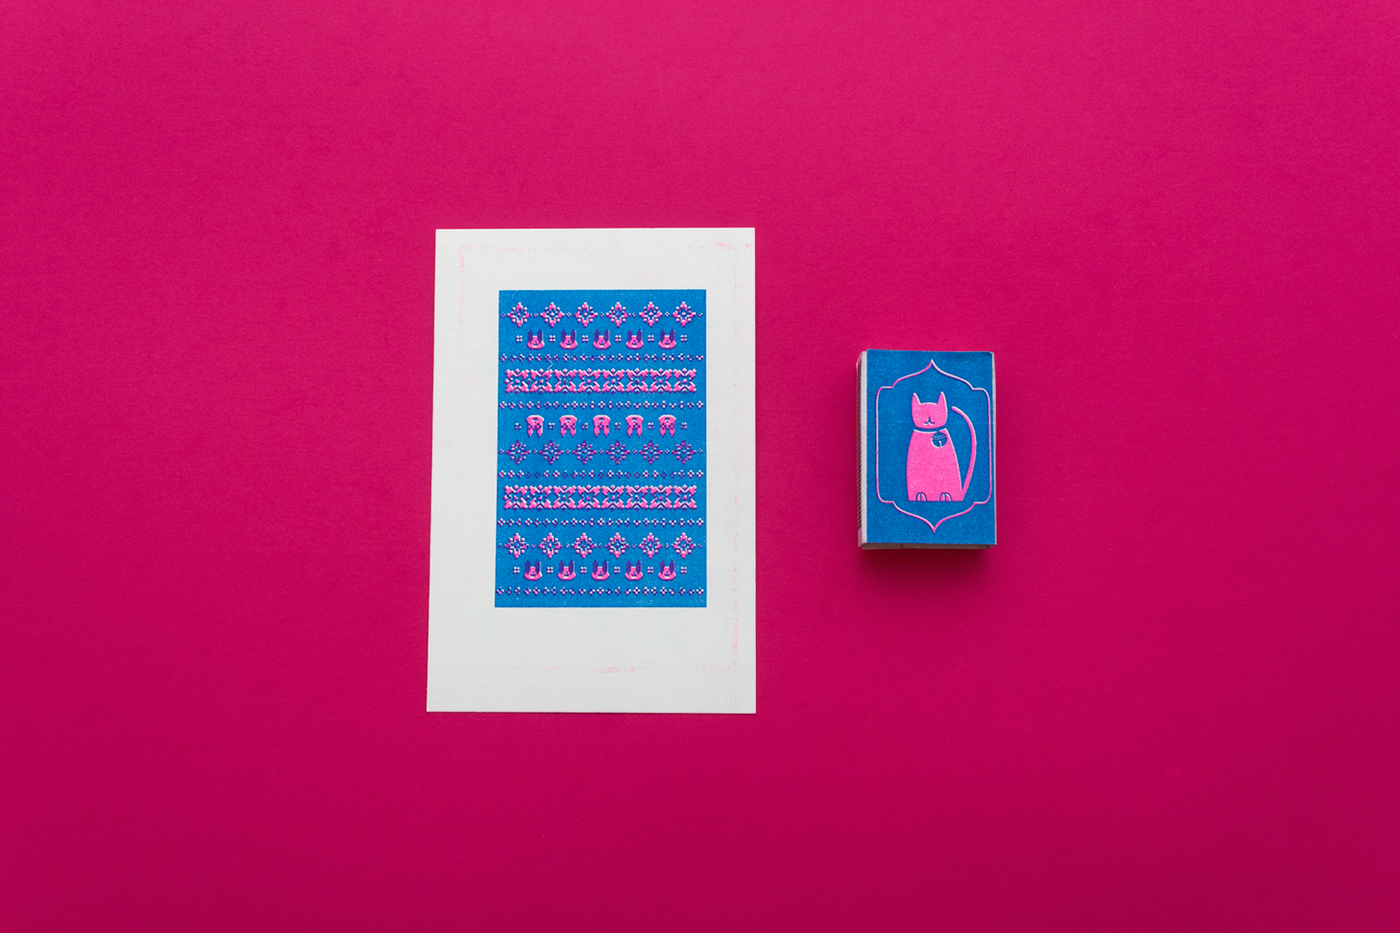 Matches postcard Packaging printdesign Risoprint graphic Christmas kotode Holiday ILLUSTRATION 